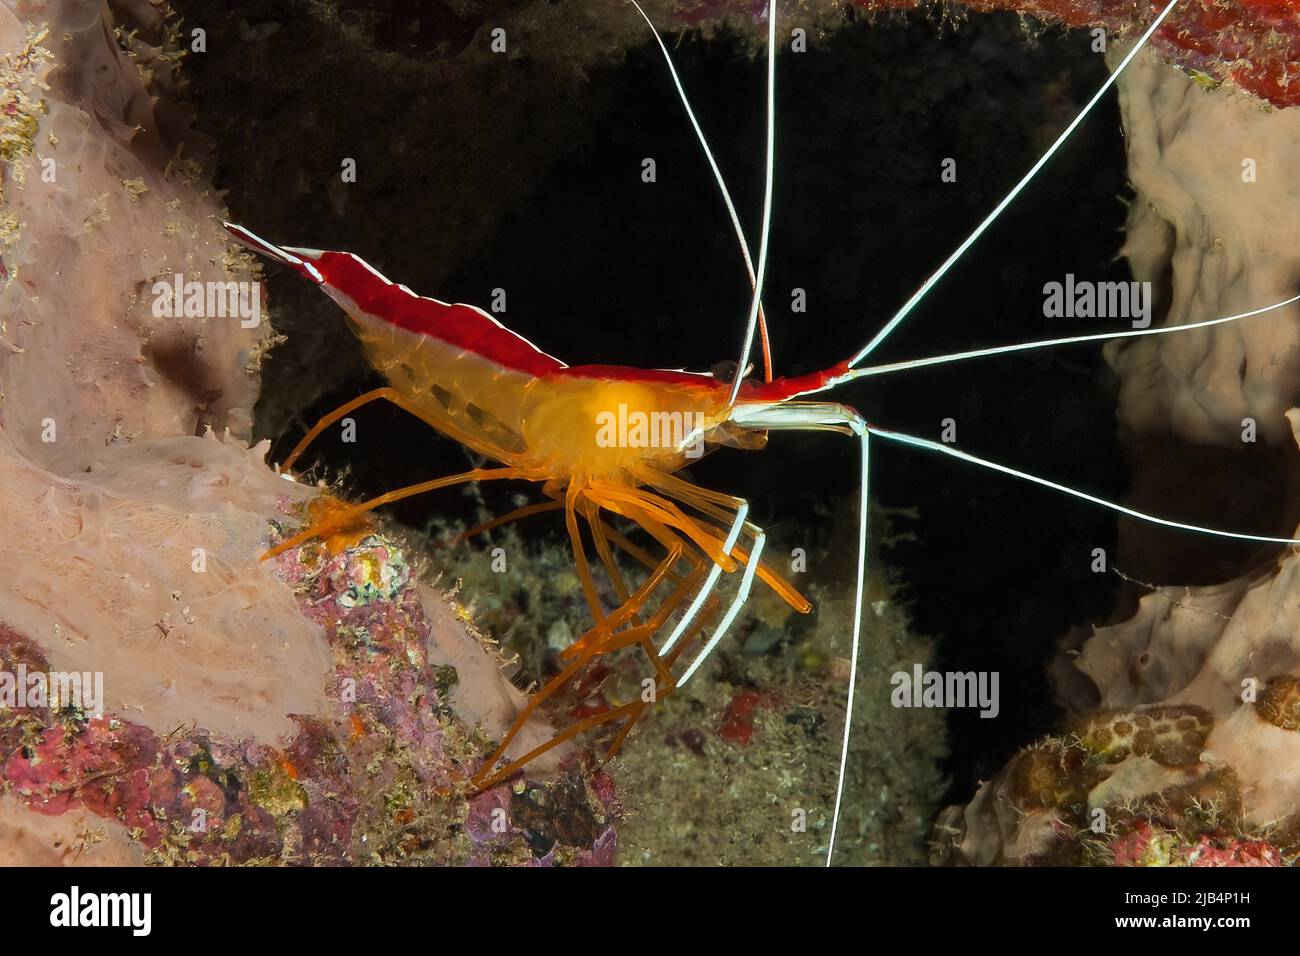 Atlantic white banded cleaner shrimp (Lysmata grabhami), Eastern Atlantic, Canary Islands, Spain Stock Photo